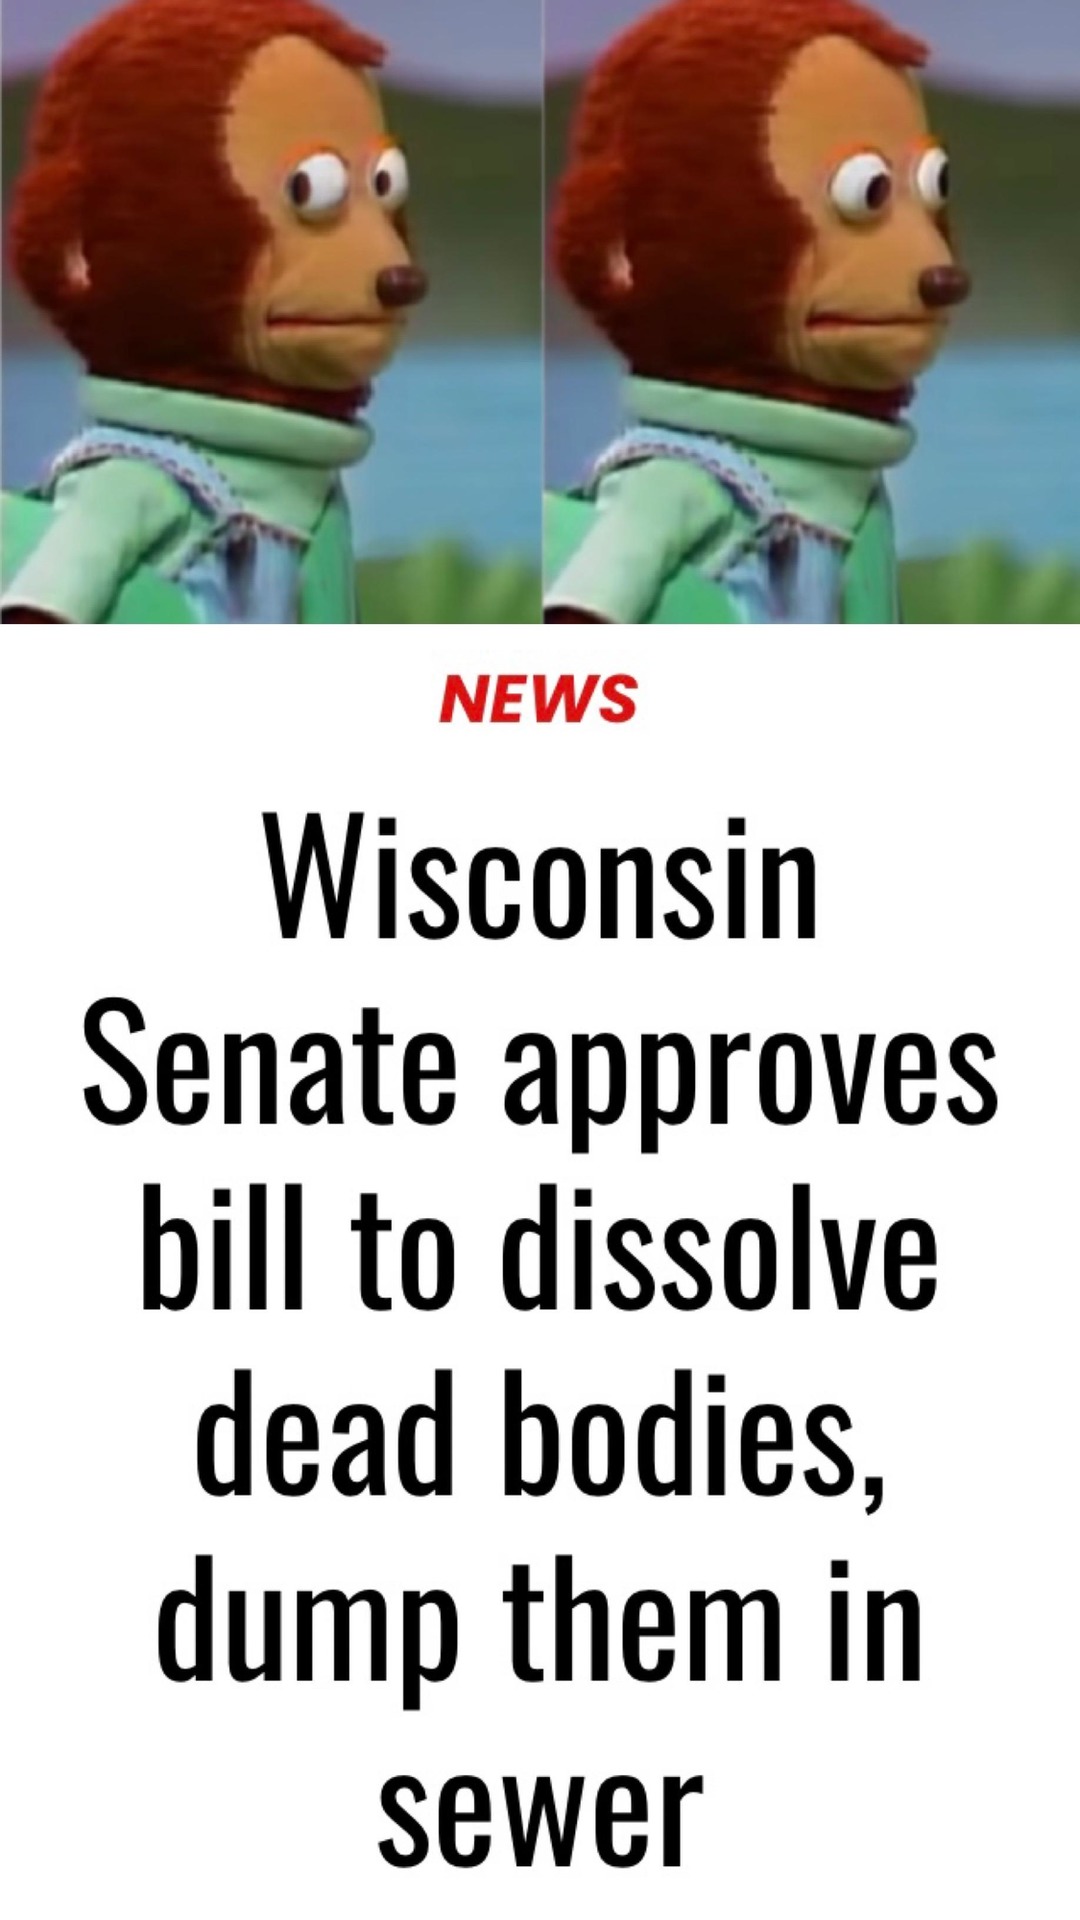 Wisconsin Senate approves bill to dissolve dead bodies, dump them in sewer - meme